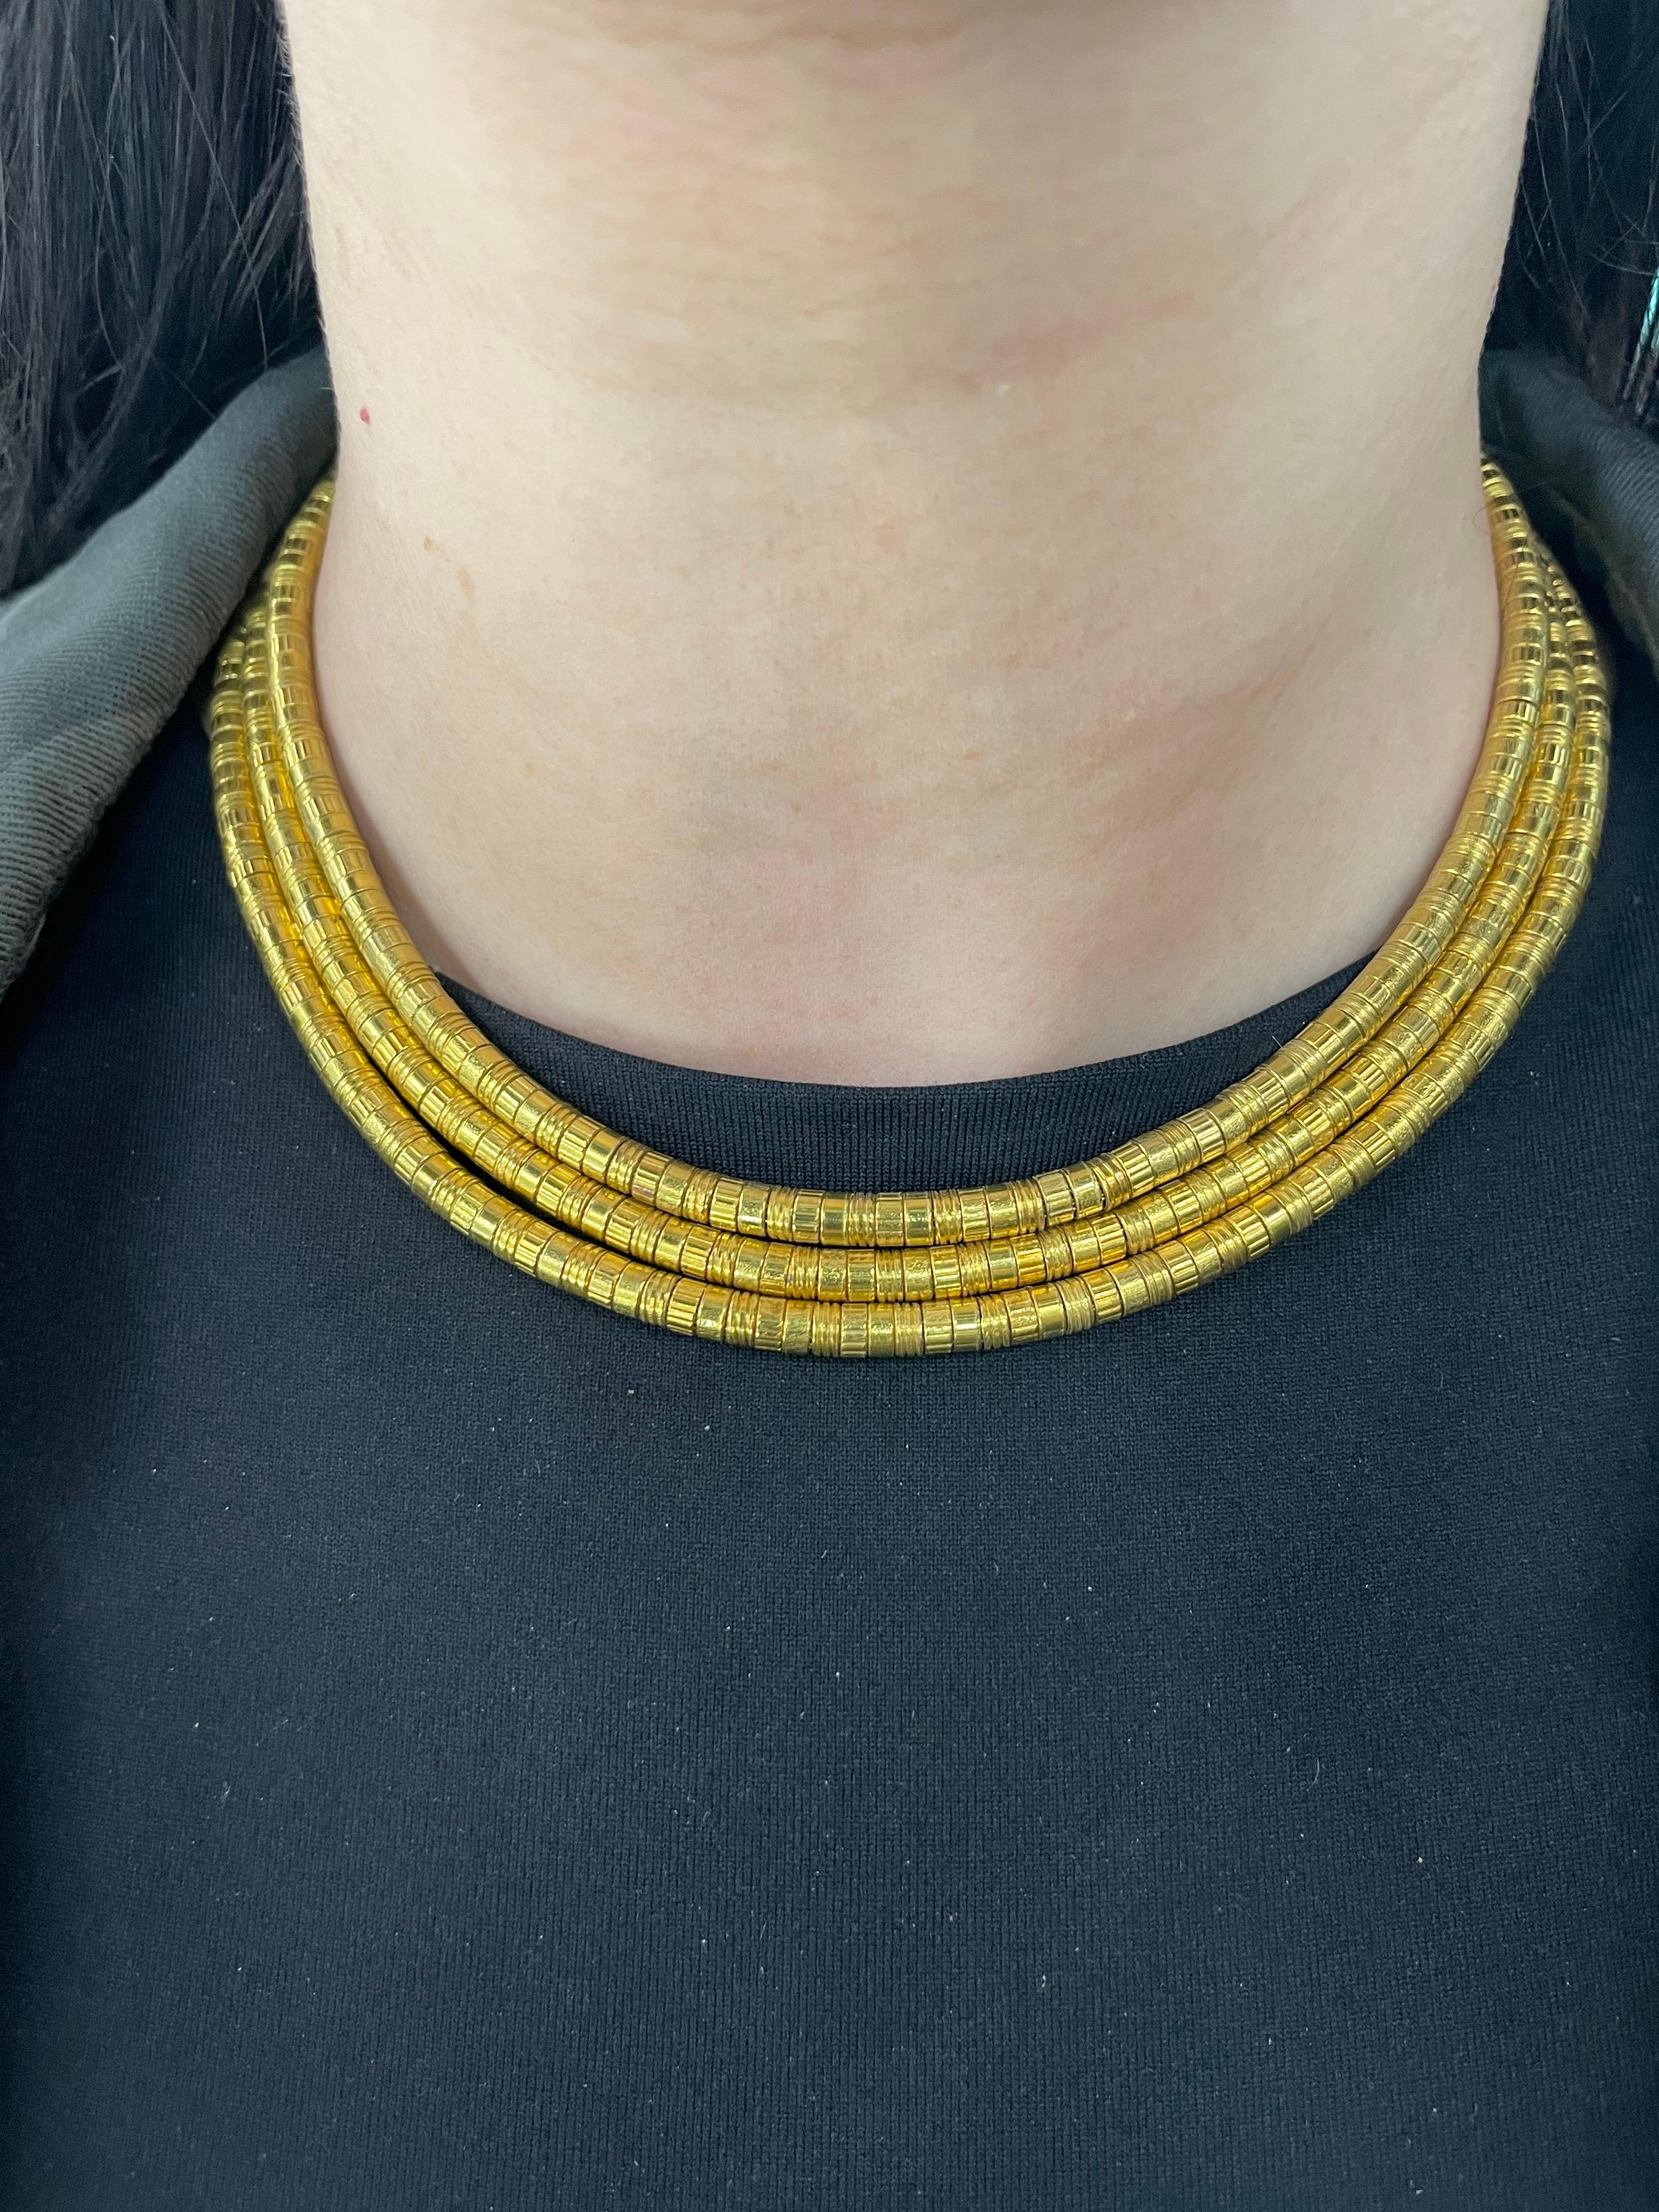 Ilias Lalaounis Greece 18 Karat Yellow Gold Three Row Collar Necklace 127 Grams 1